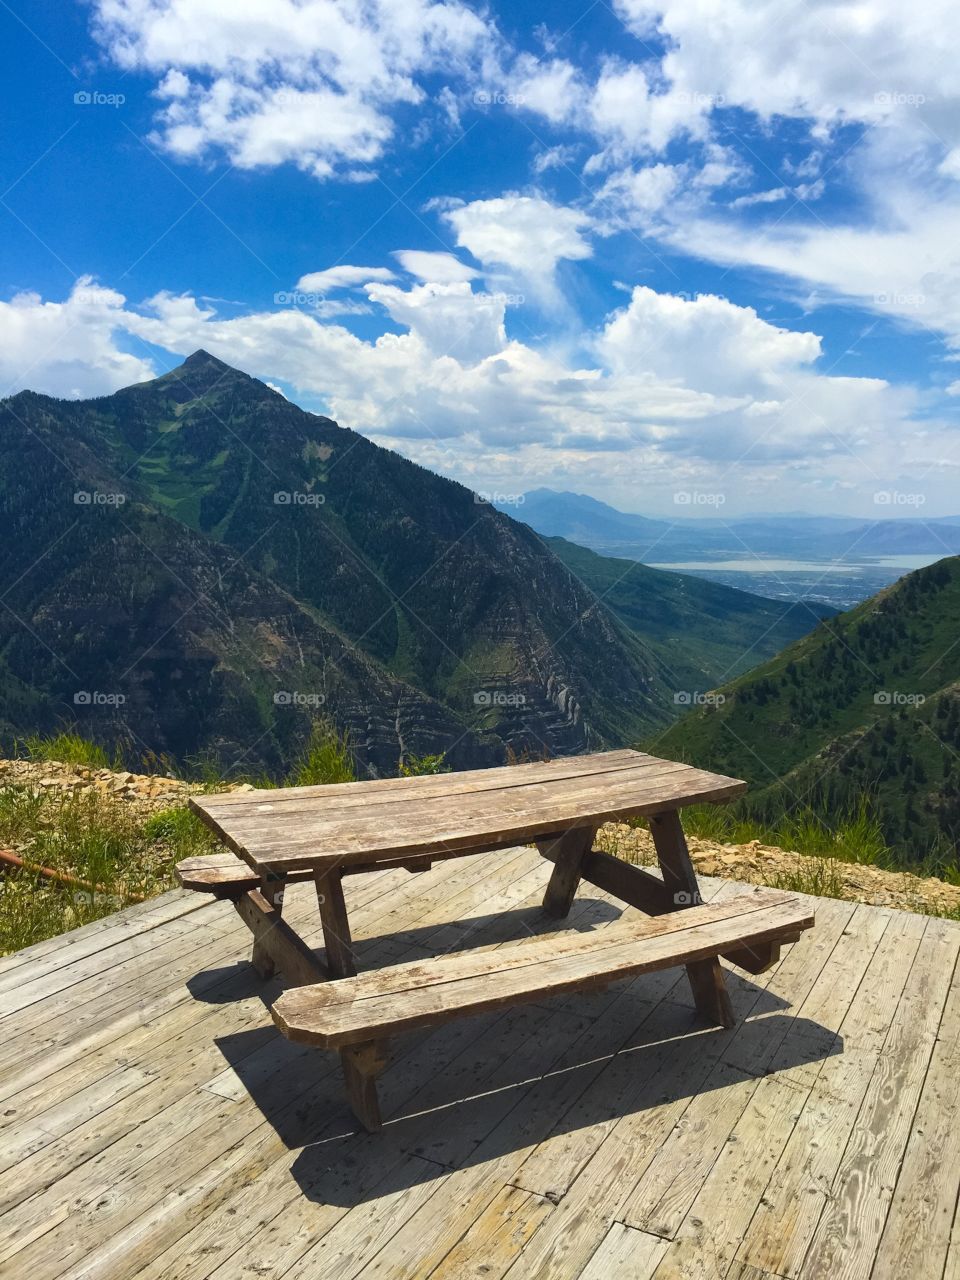 Mountain picnic table 